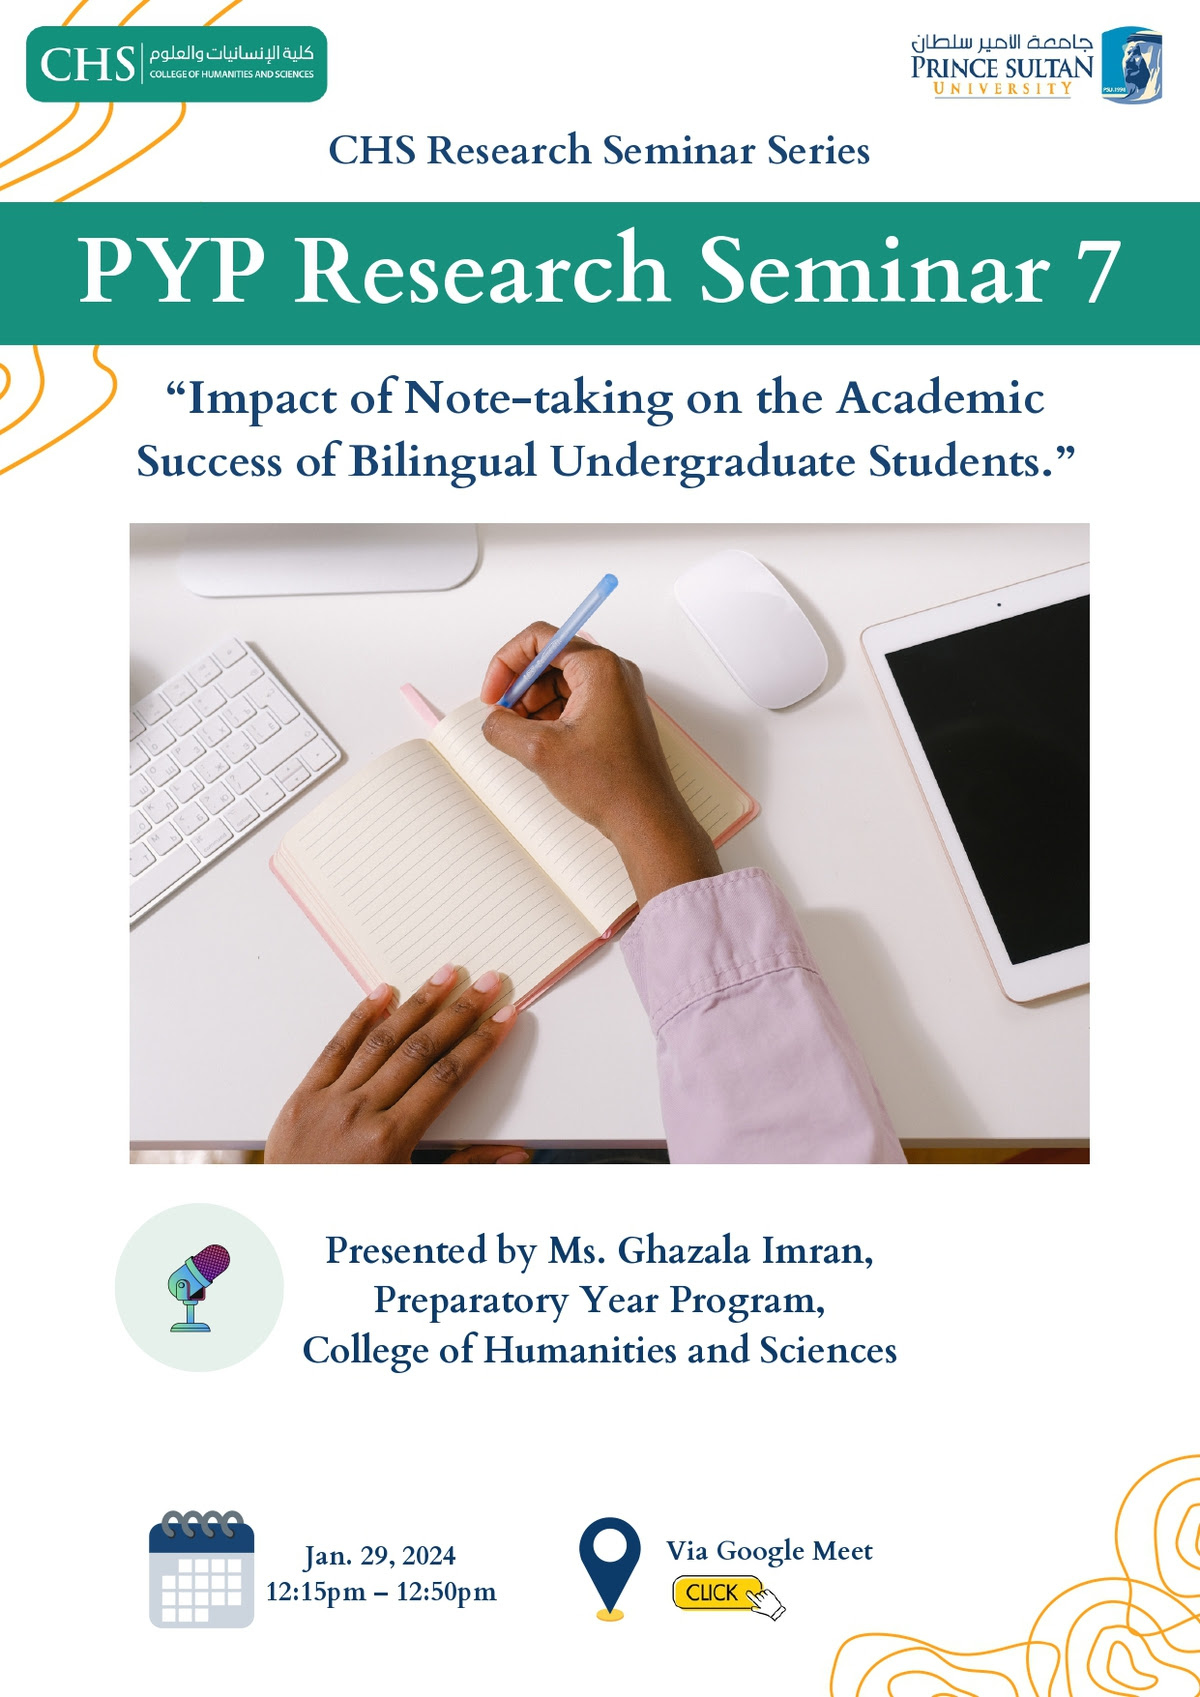 PYP Research Seminar 7